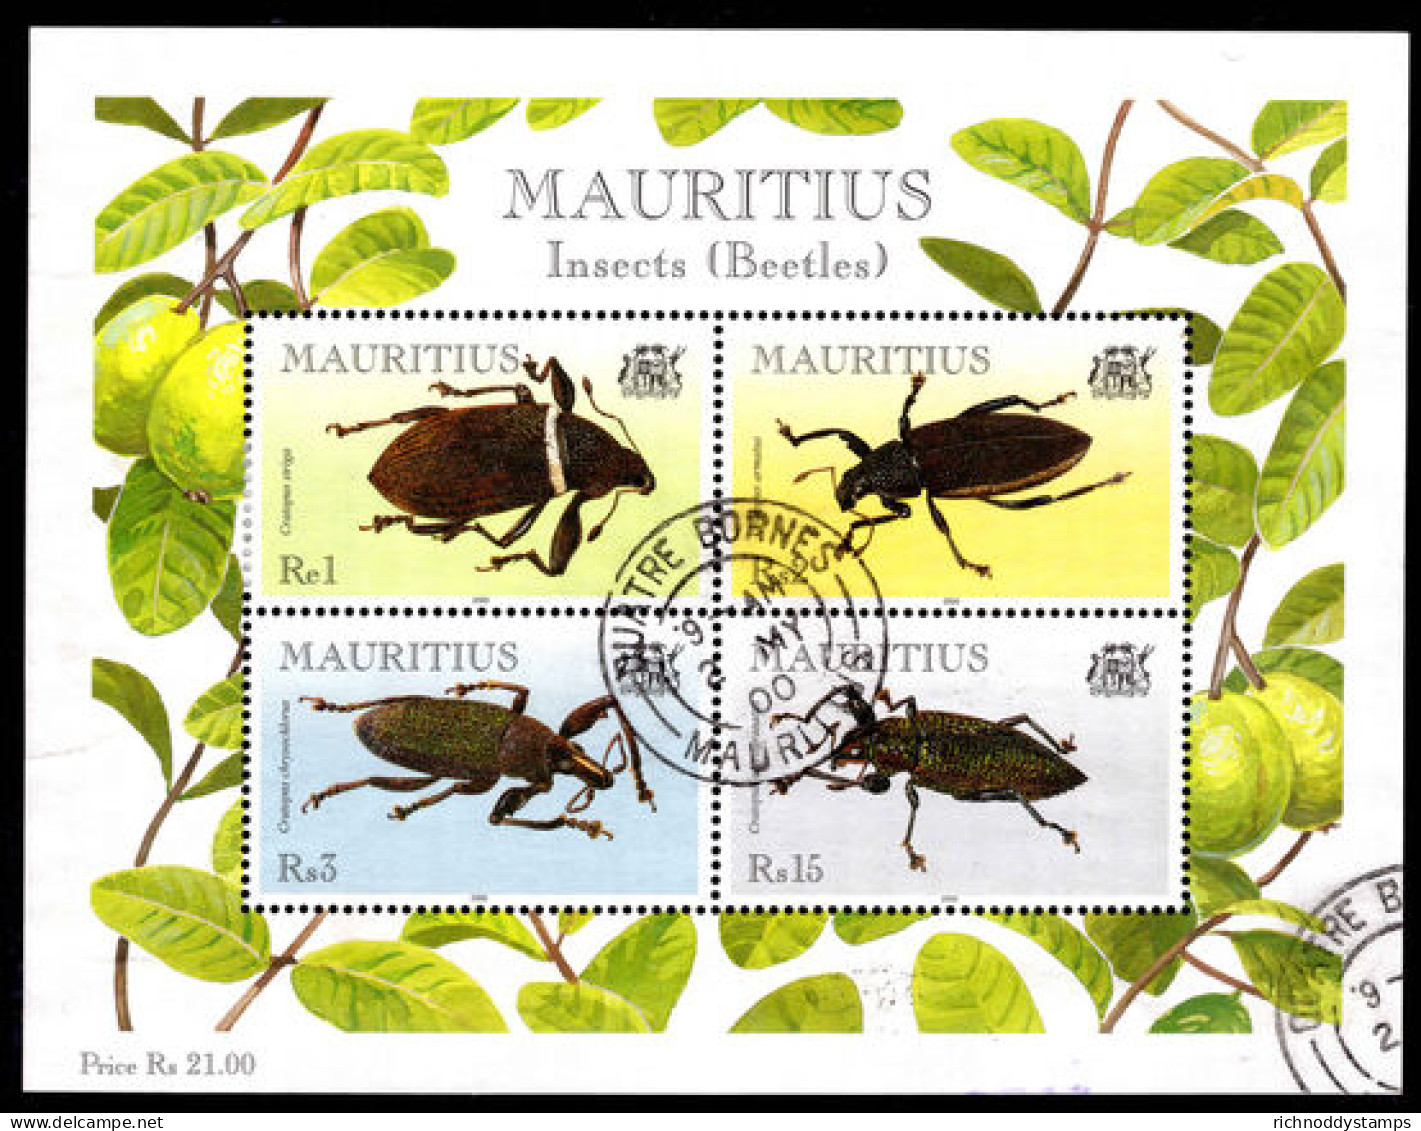 Mauritius 2000 Beetles Souvenir Sheet Fine Used. - Maurice (1968-...)